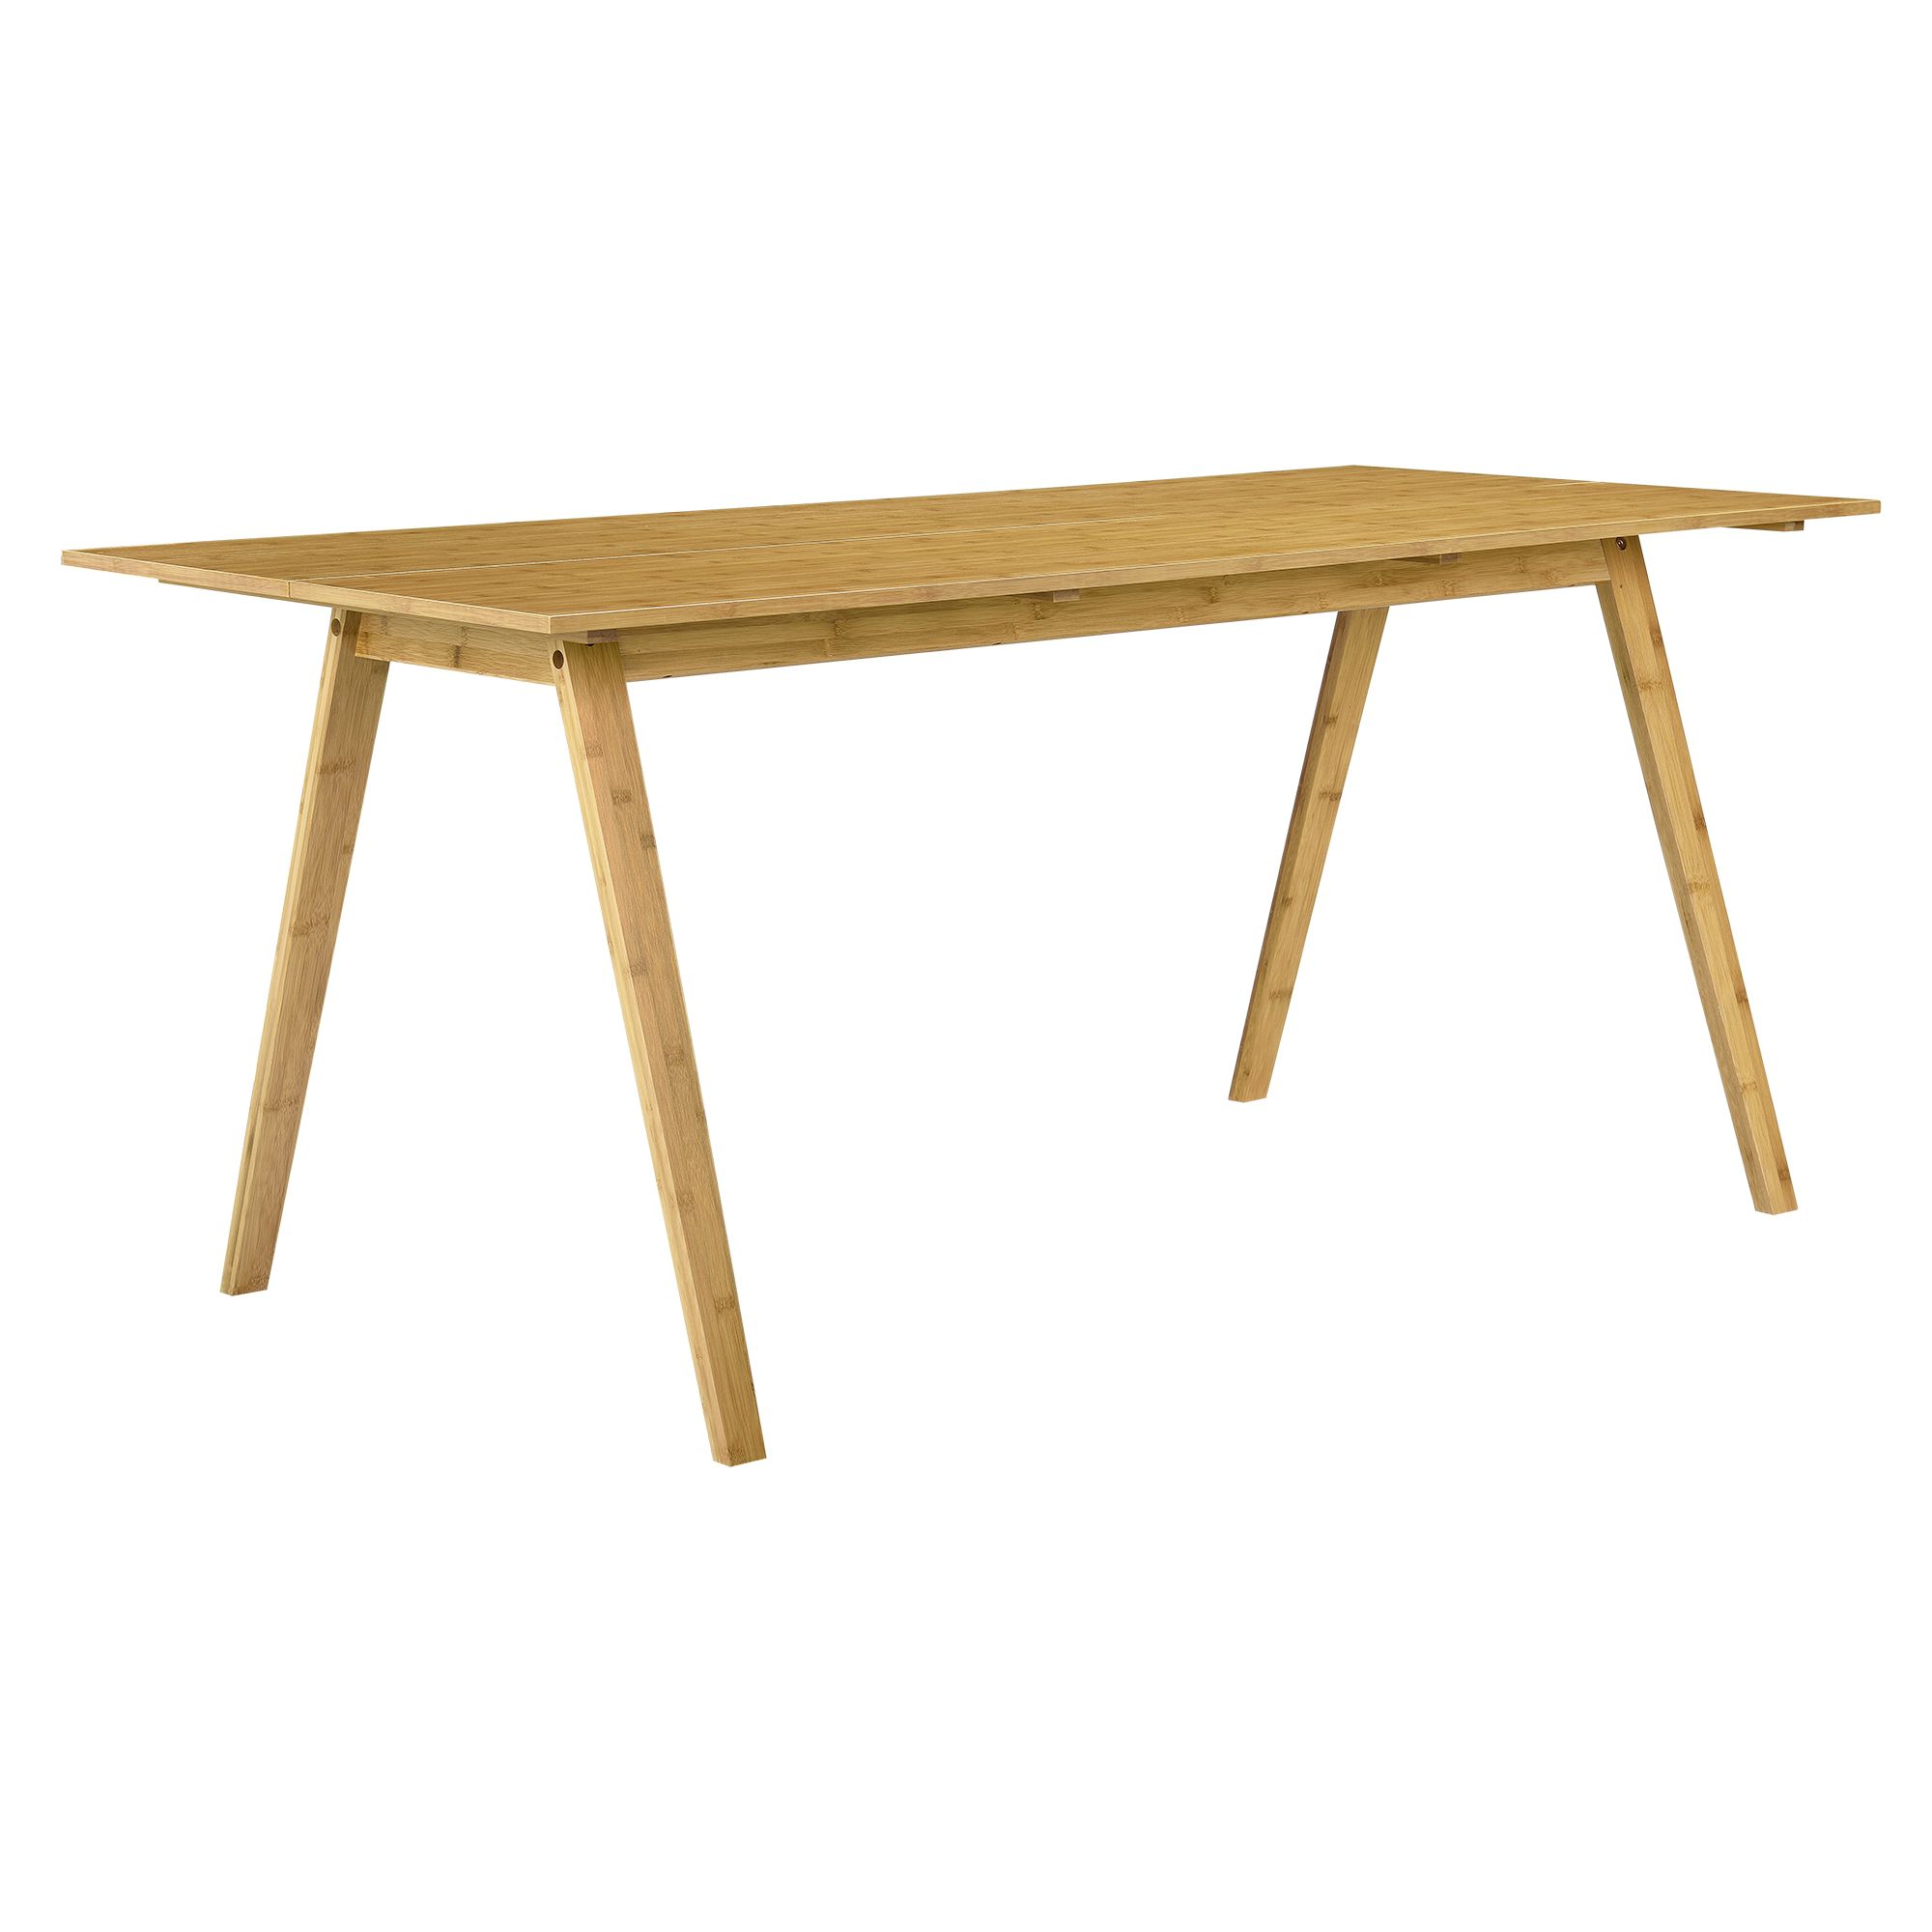 [en.casa] Jídelní stůl \"Niko\" HTNT-4301 - 180 x 80 cm - MDF, bambus - H.T. Trade Service GmbH & Co. KG